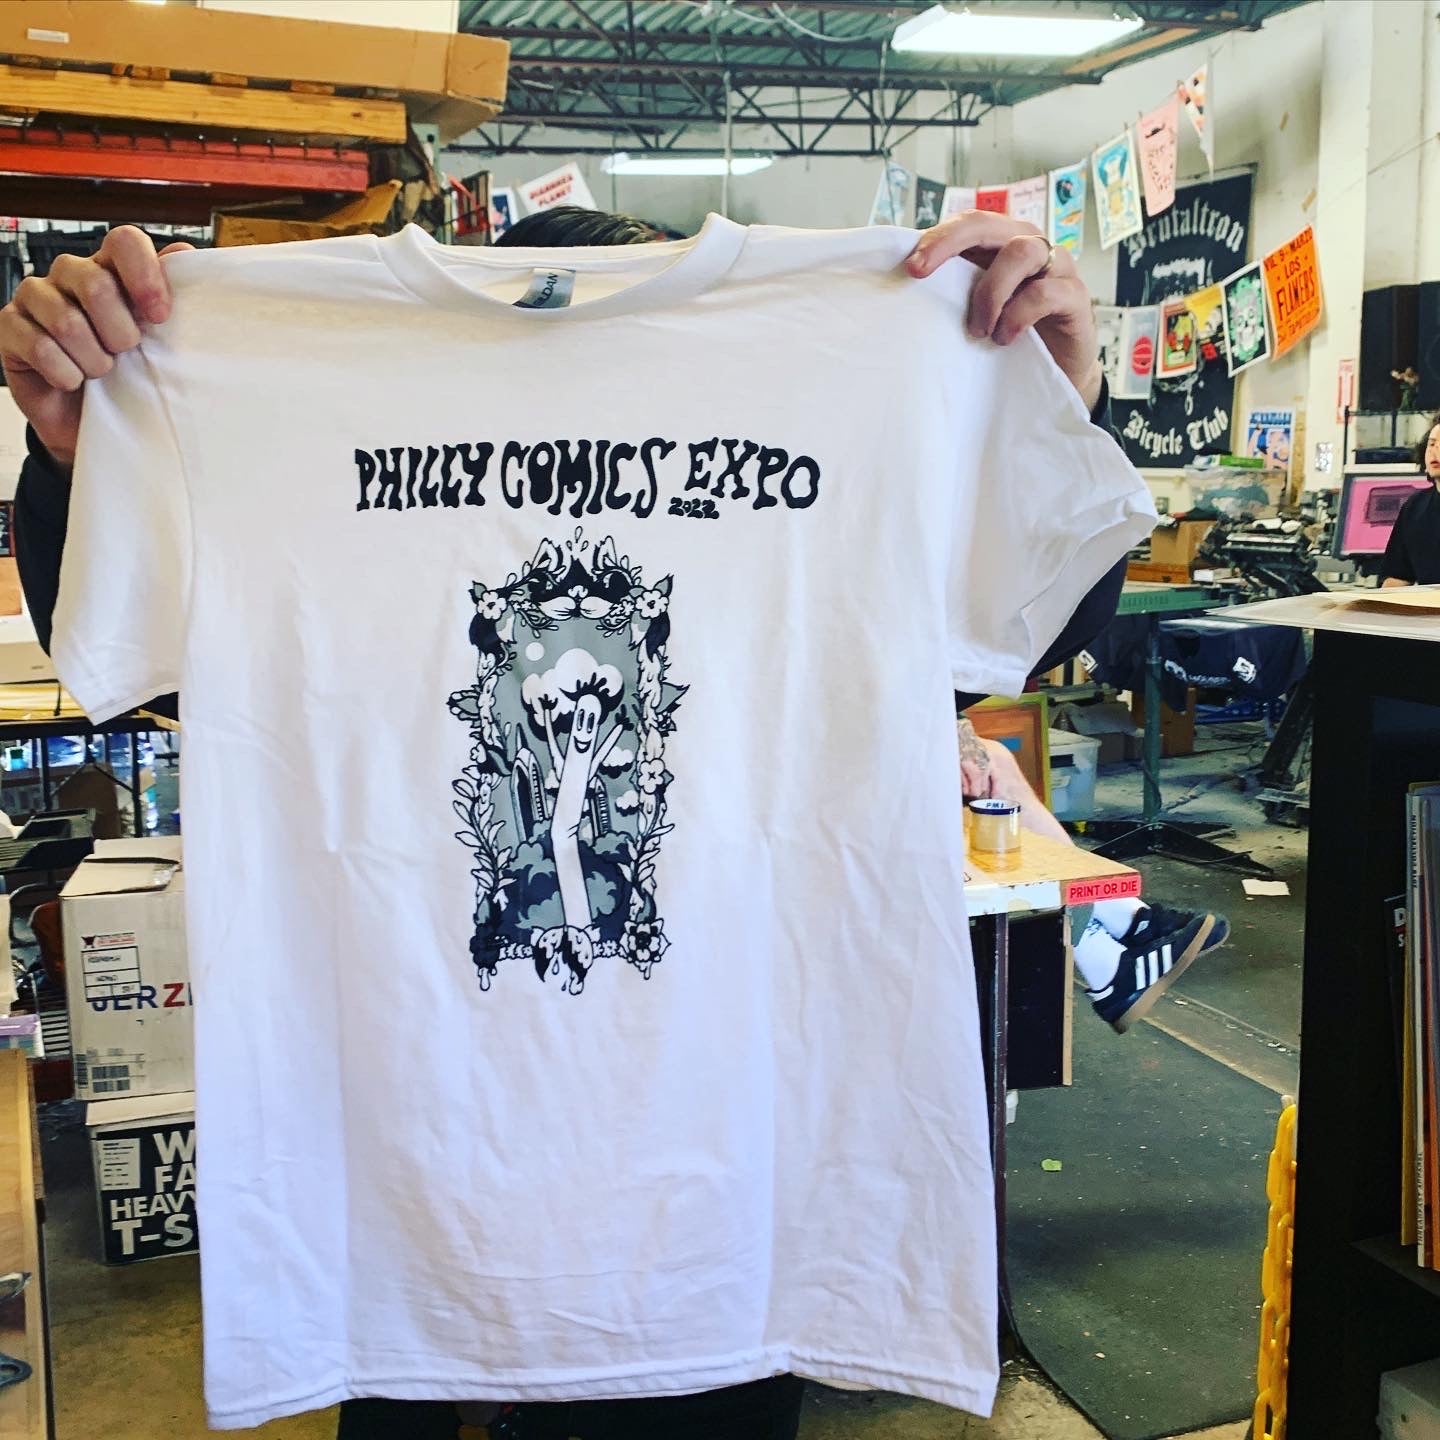 Philly Comics Expo T-Shirt